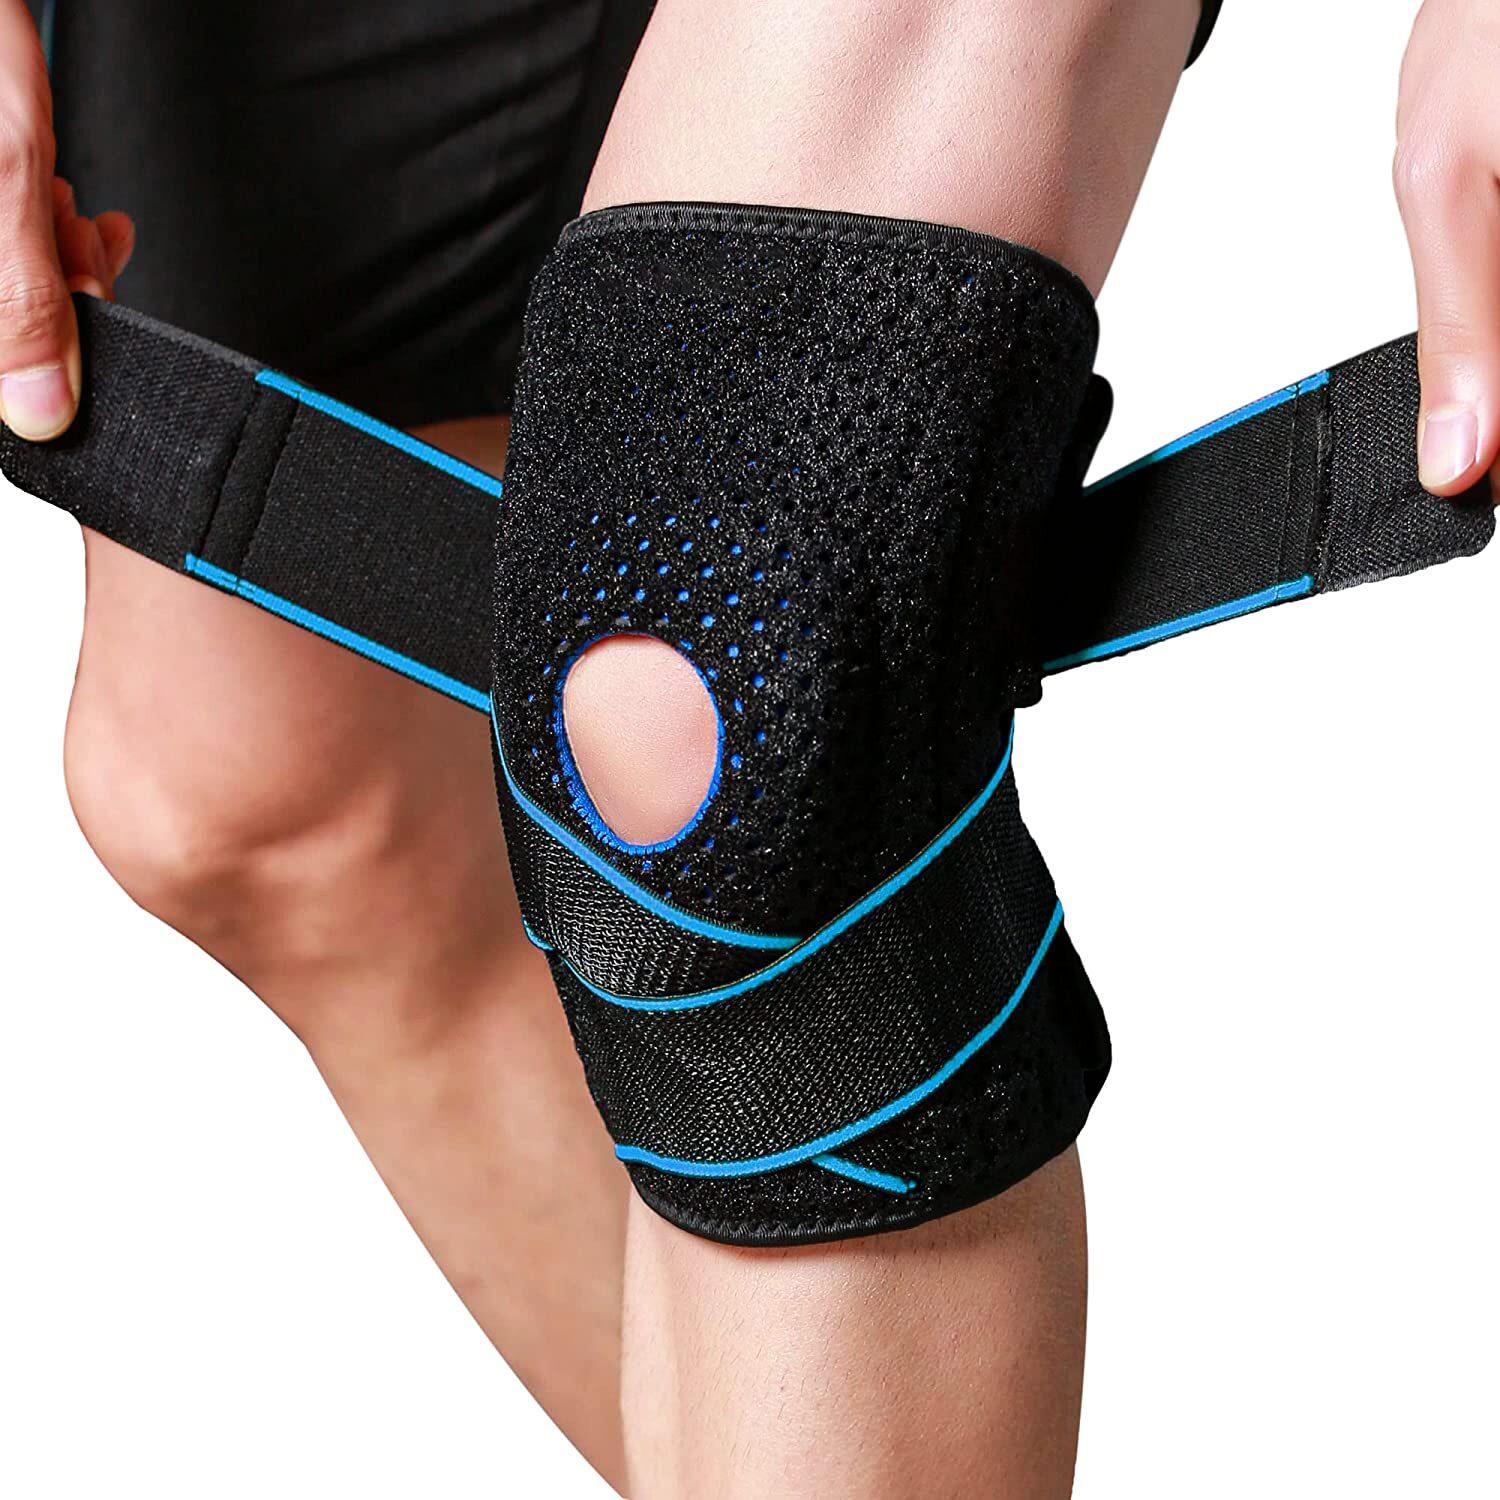 https://nuovahealth.co.uk/wp-content/uploads/2022/05/knee-stabilizer-brace-compression-sleeve-1.jpg